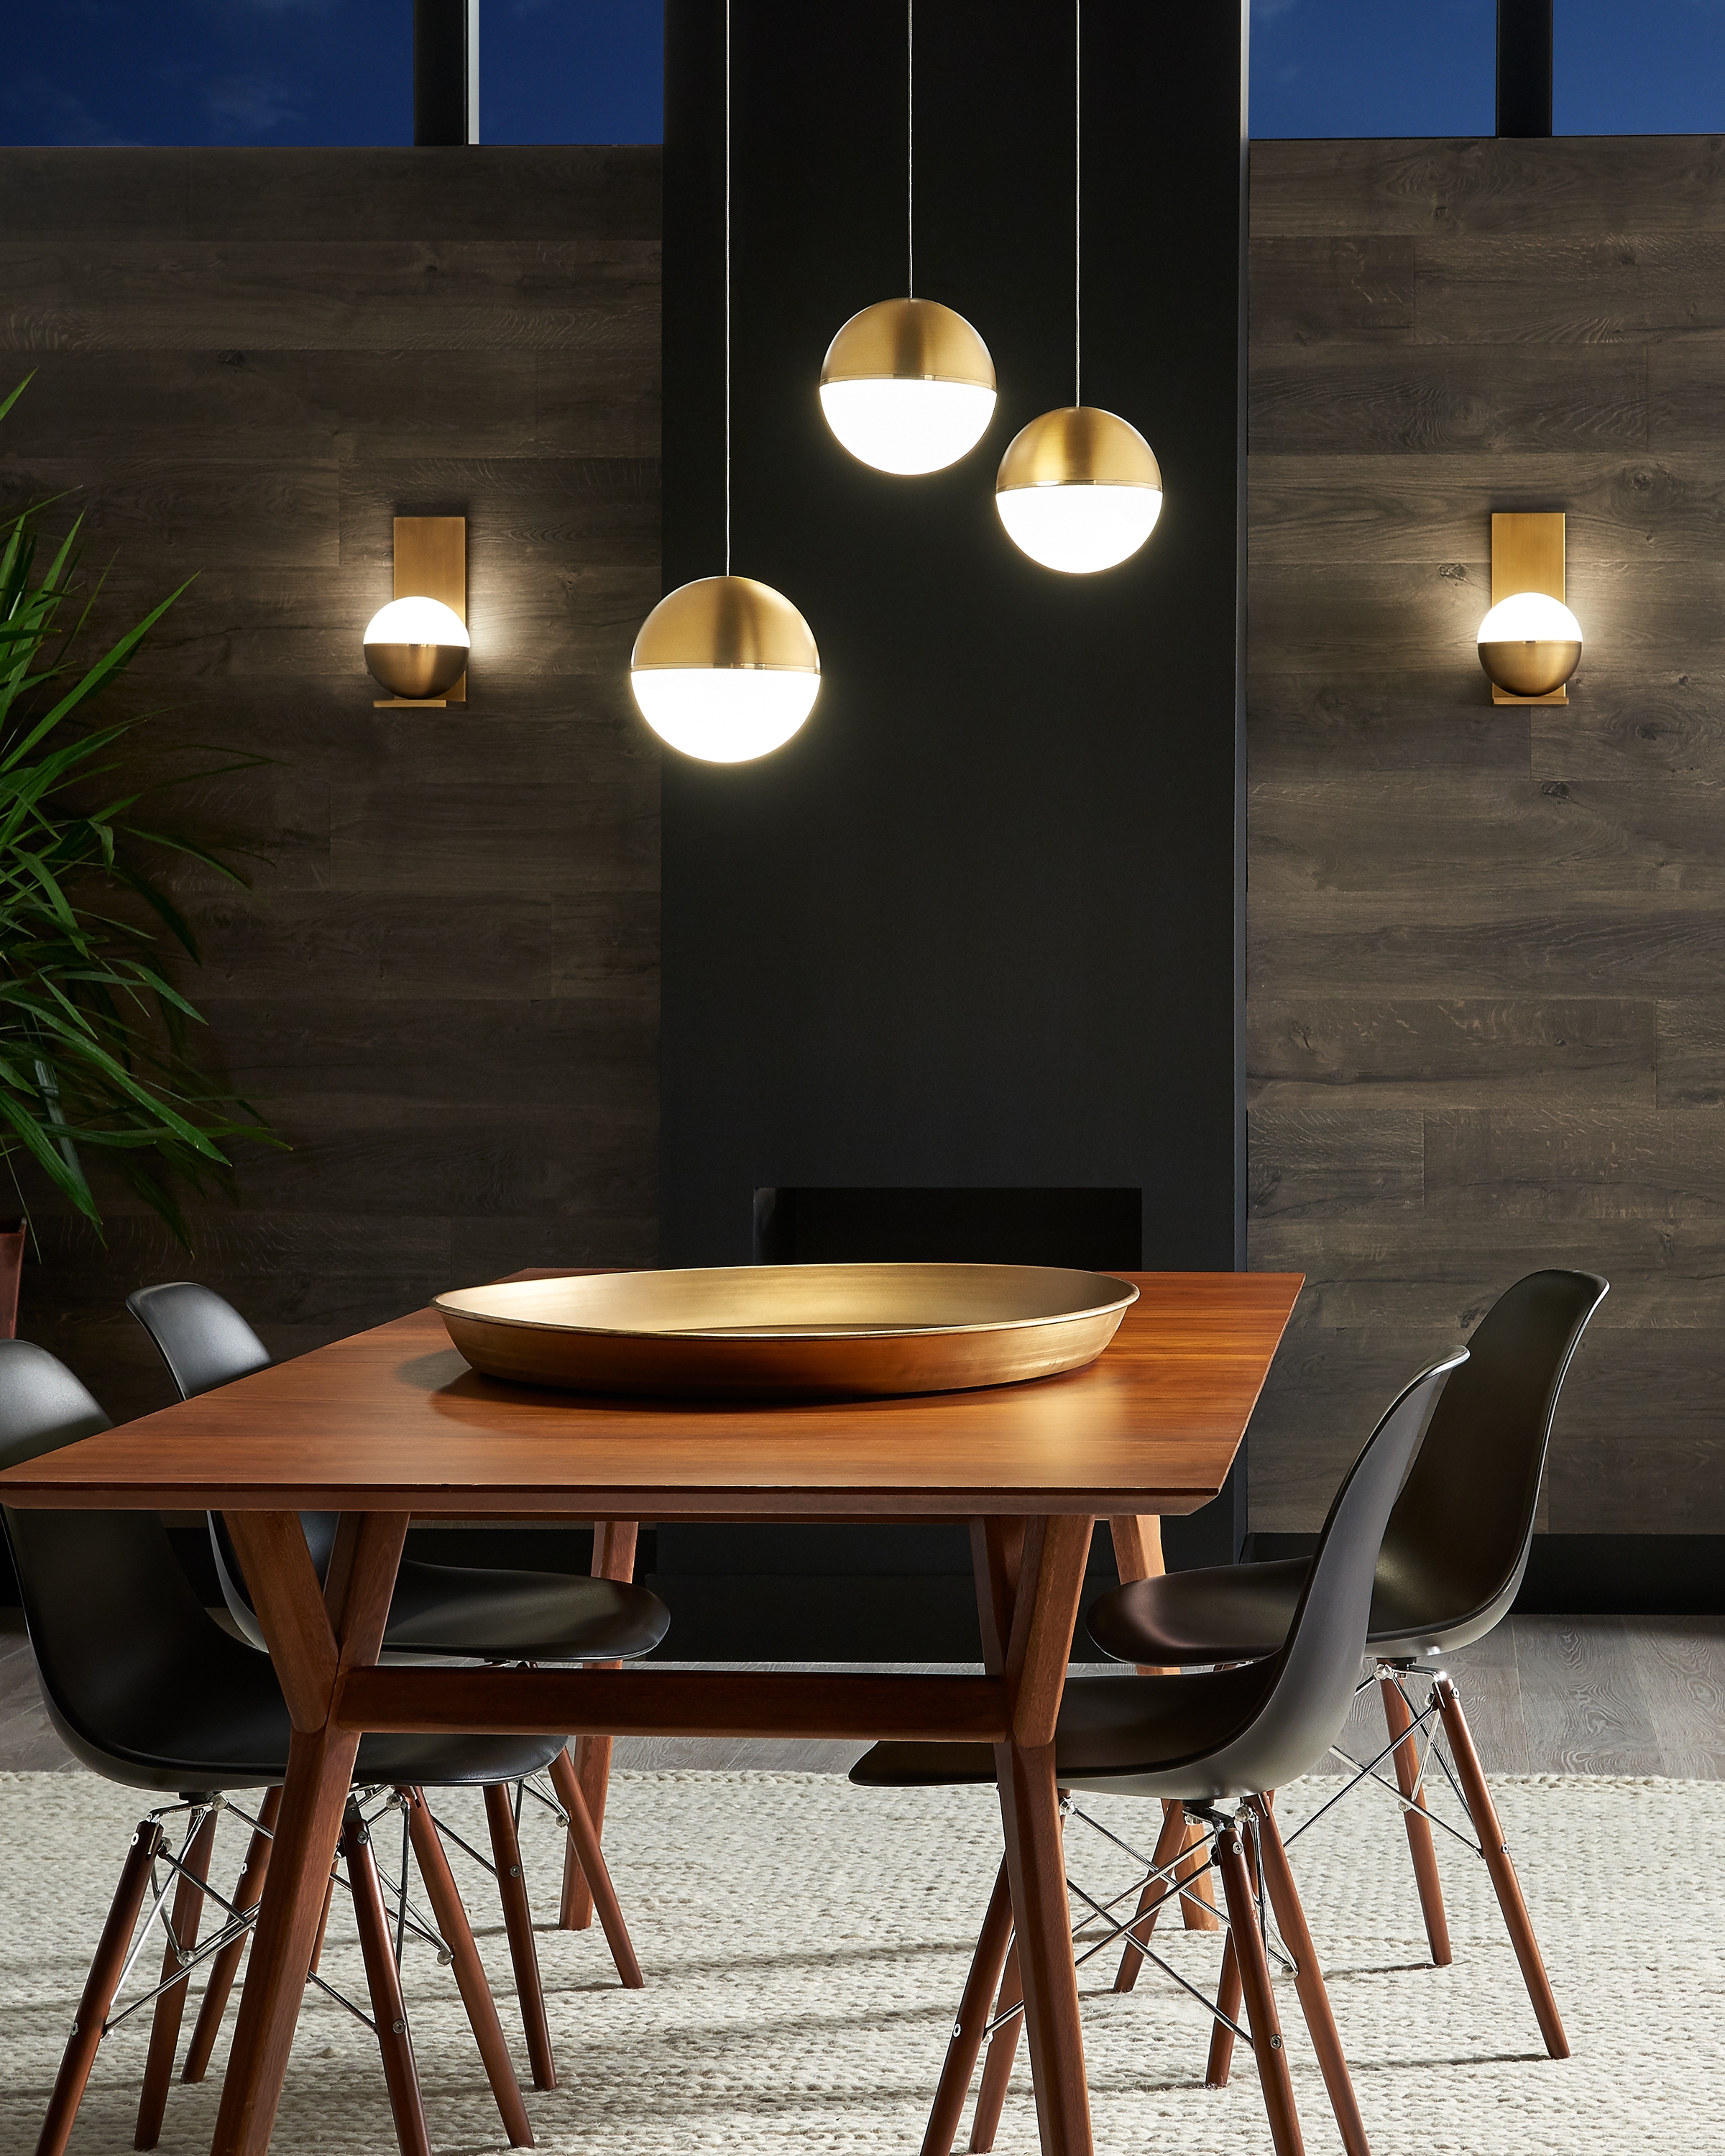 Akova LED Mini Pendants above a wooden dining table.